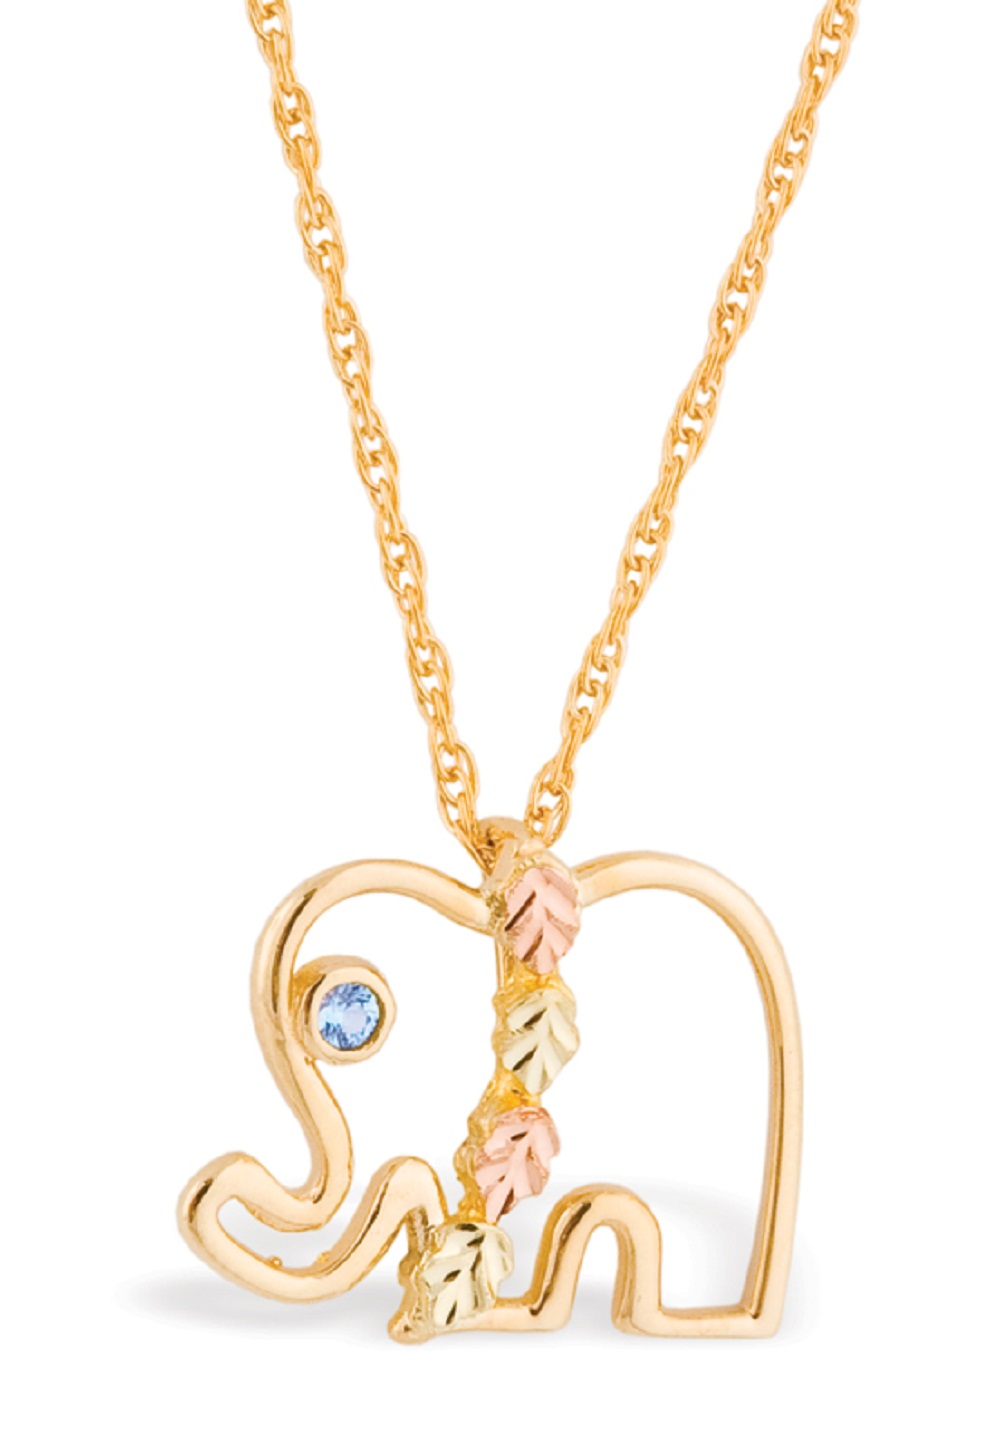 Black Hills Gold Necklace with CZ Elephant Shaped Pendant. 